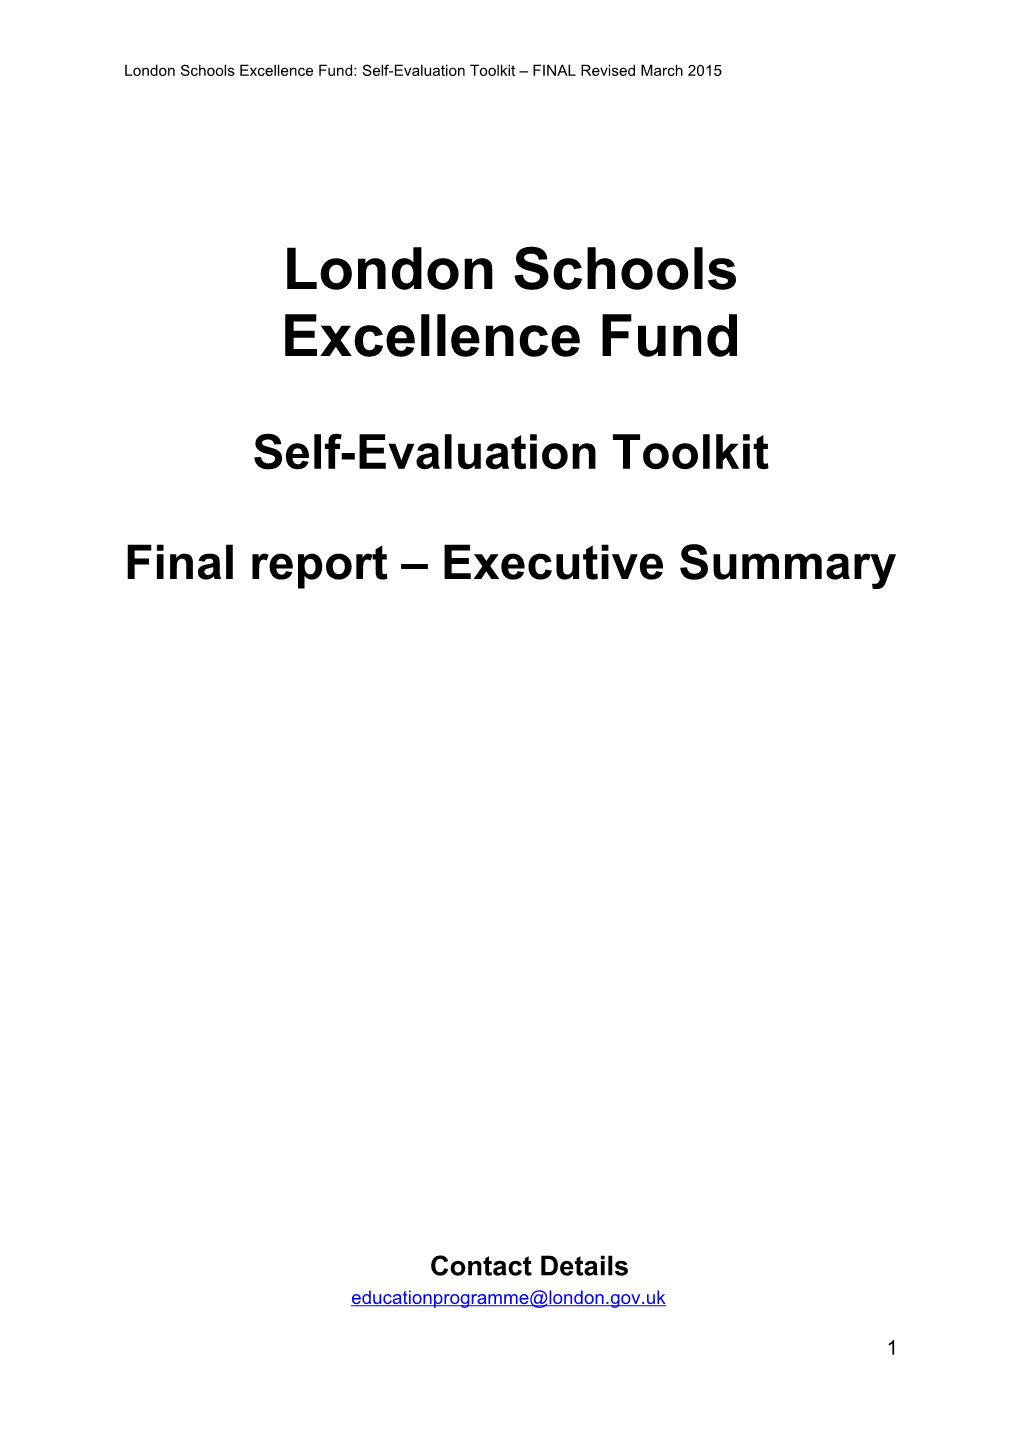 London Schools Evaluation Fund